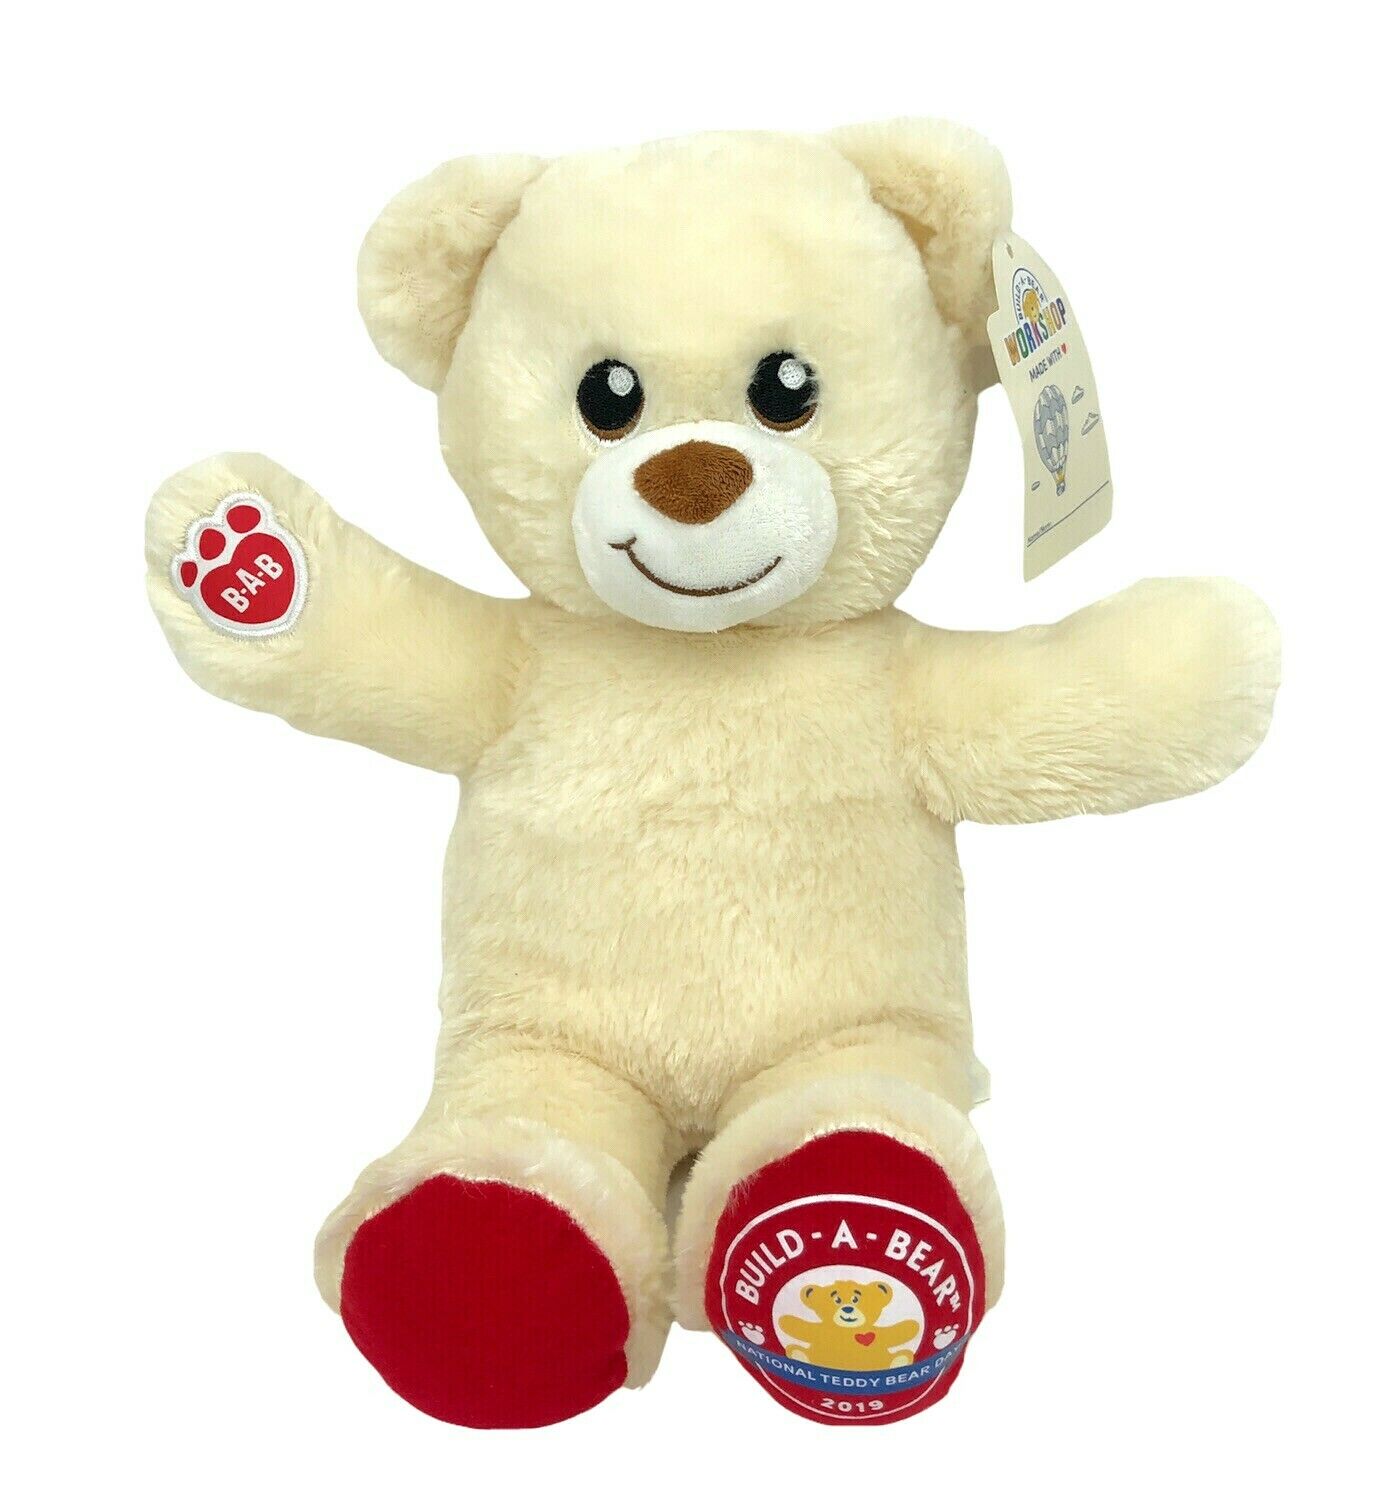 Build A Bear National Teddy Bear Day 2019 Limited Edition 15” Plush Stuffed Toy